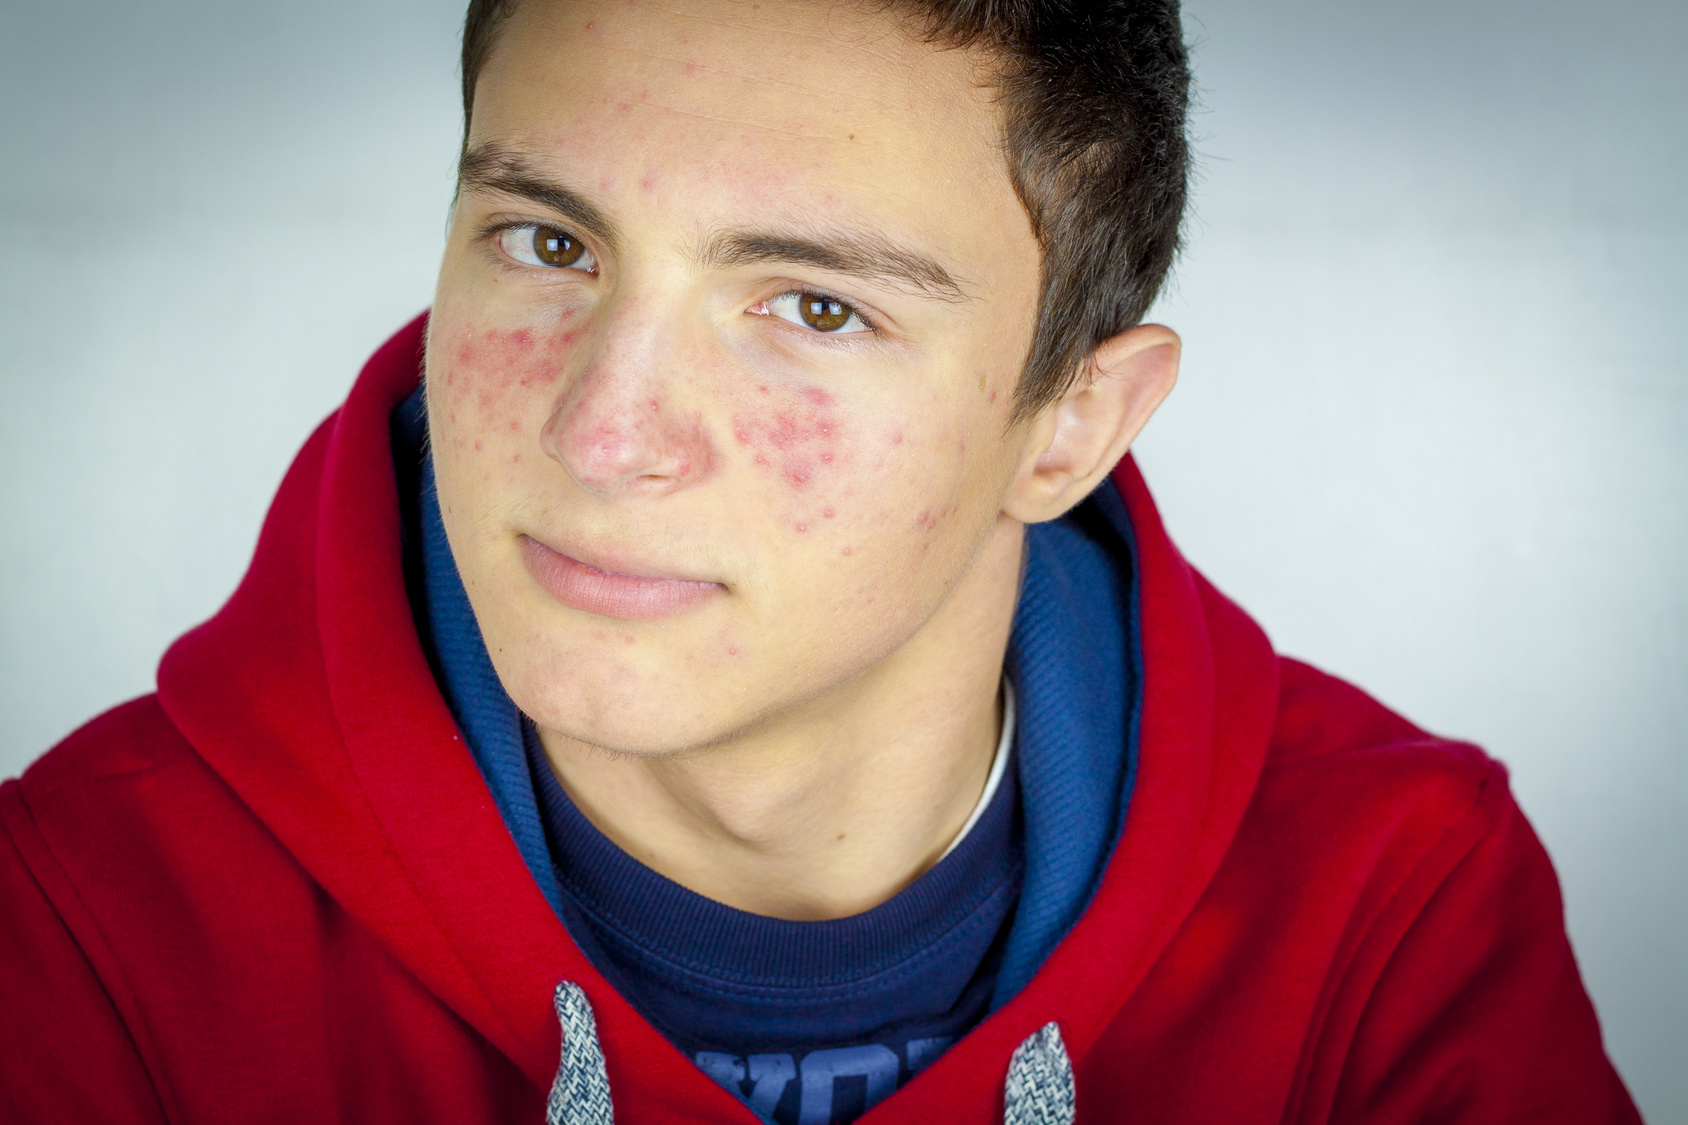 Portrait Of Teenage Boy With Acne